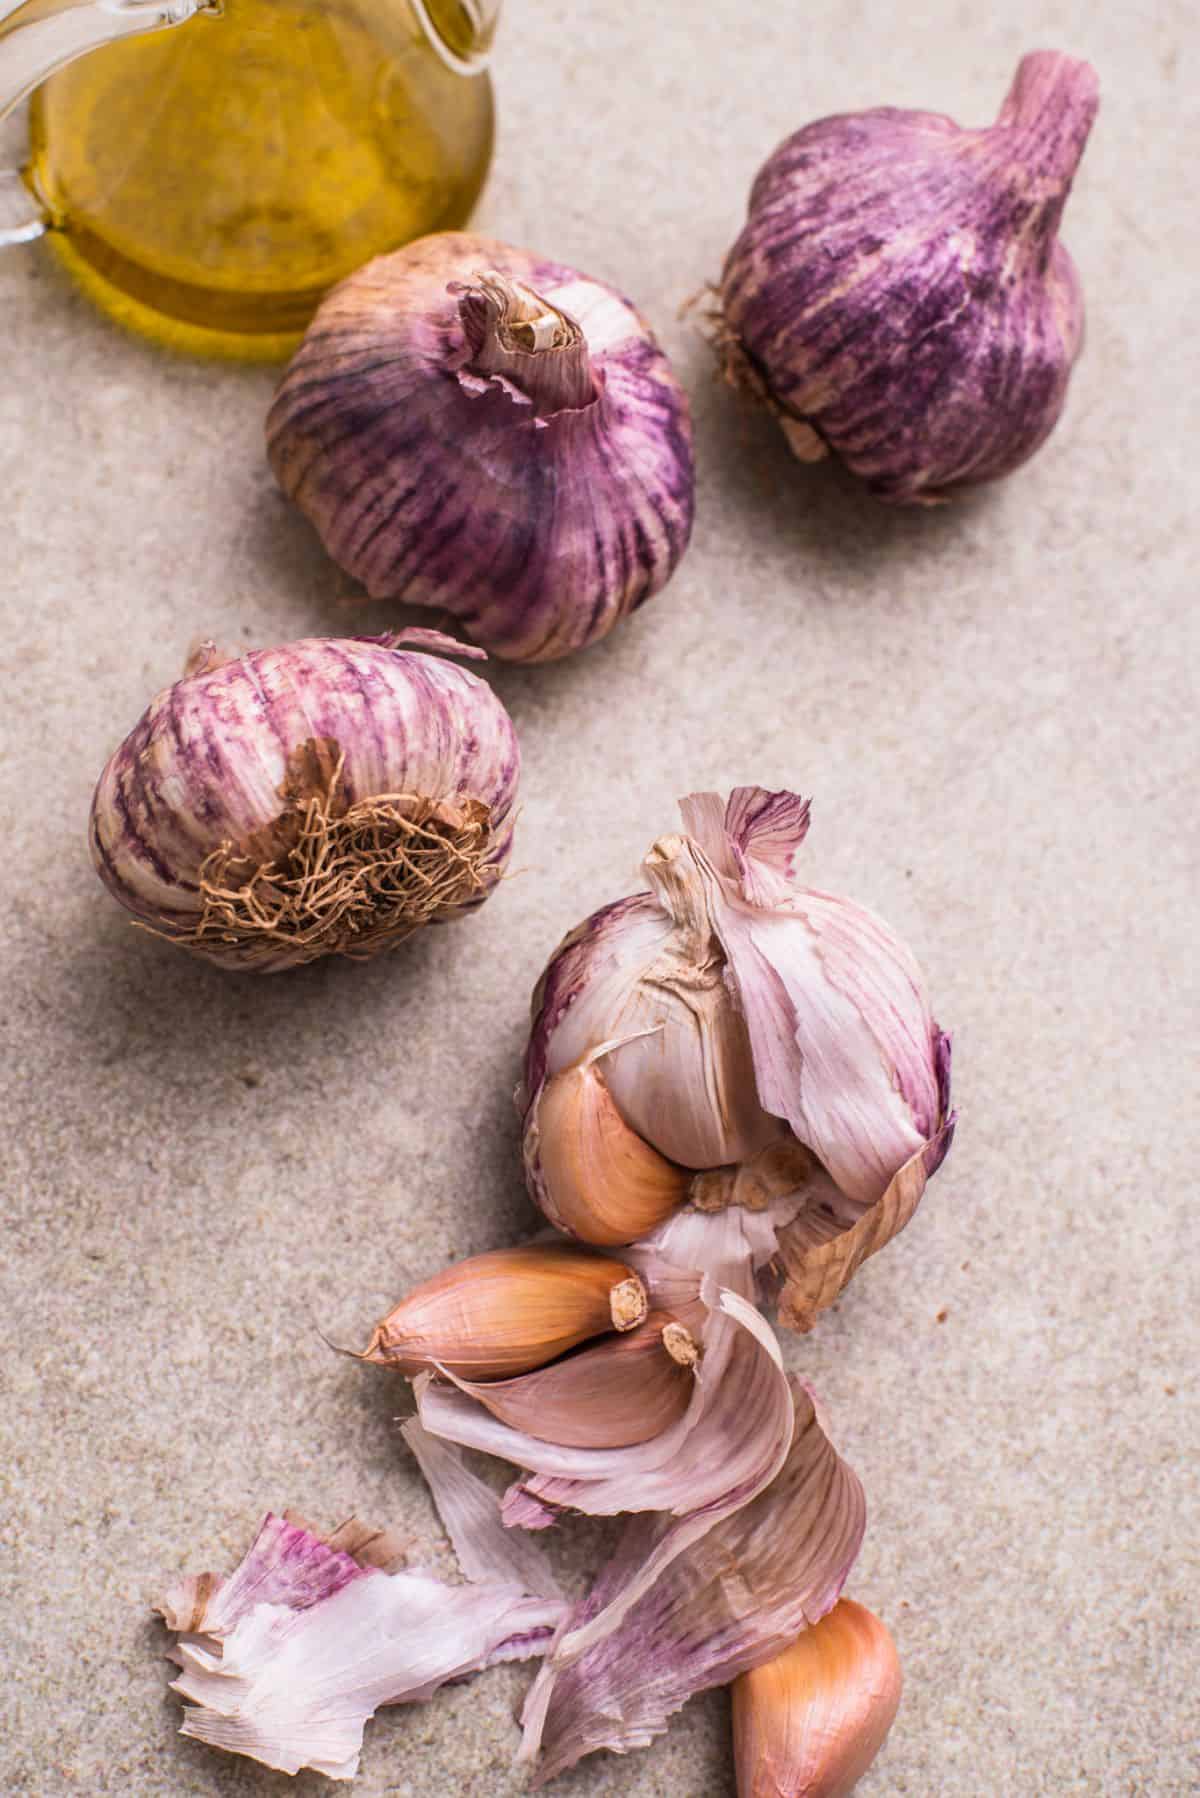 Roasted garlic ingredients